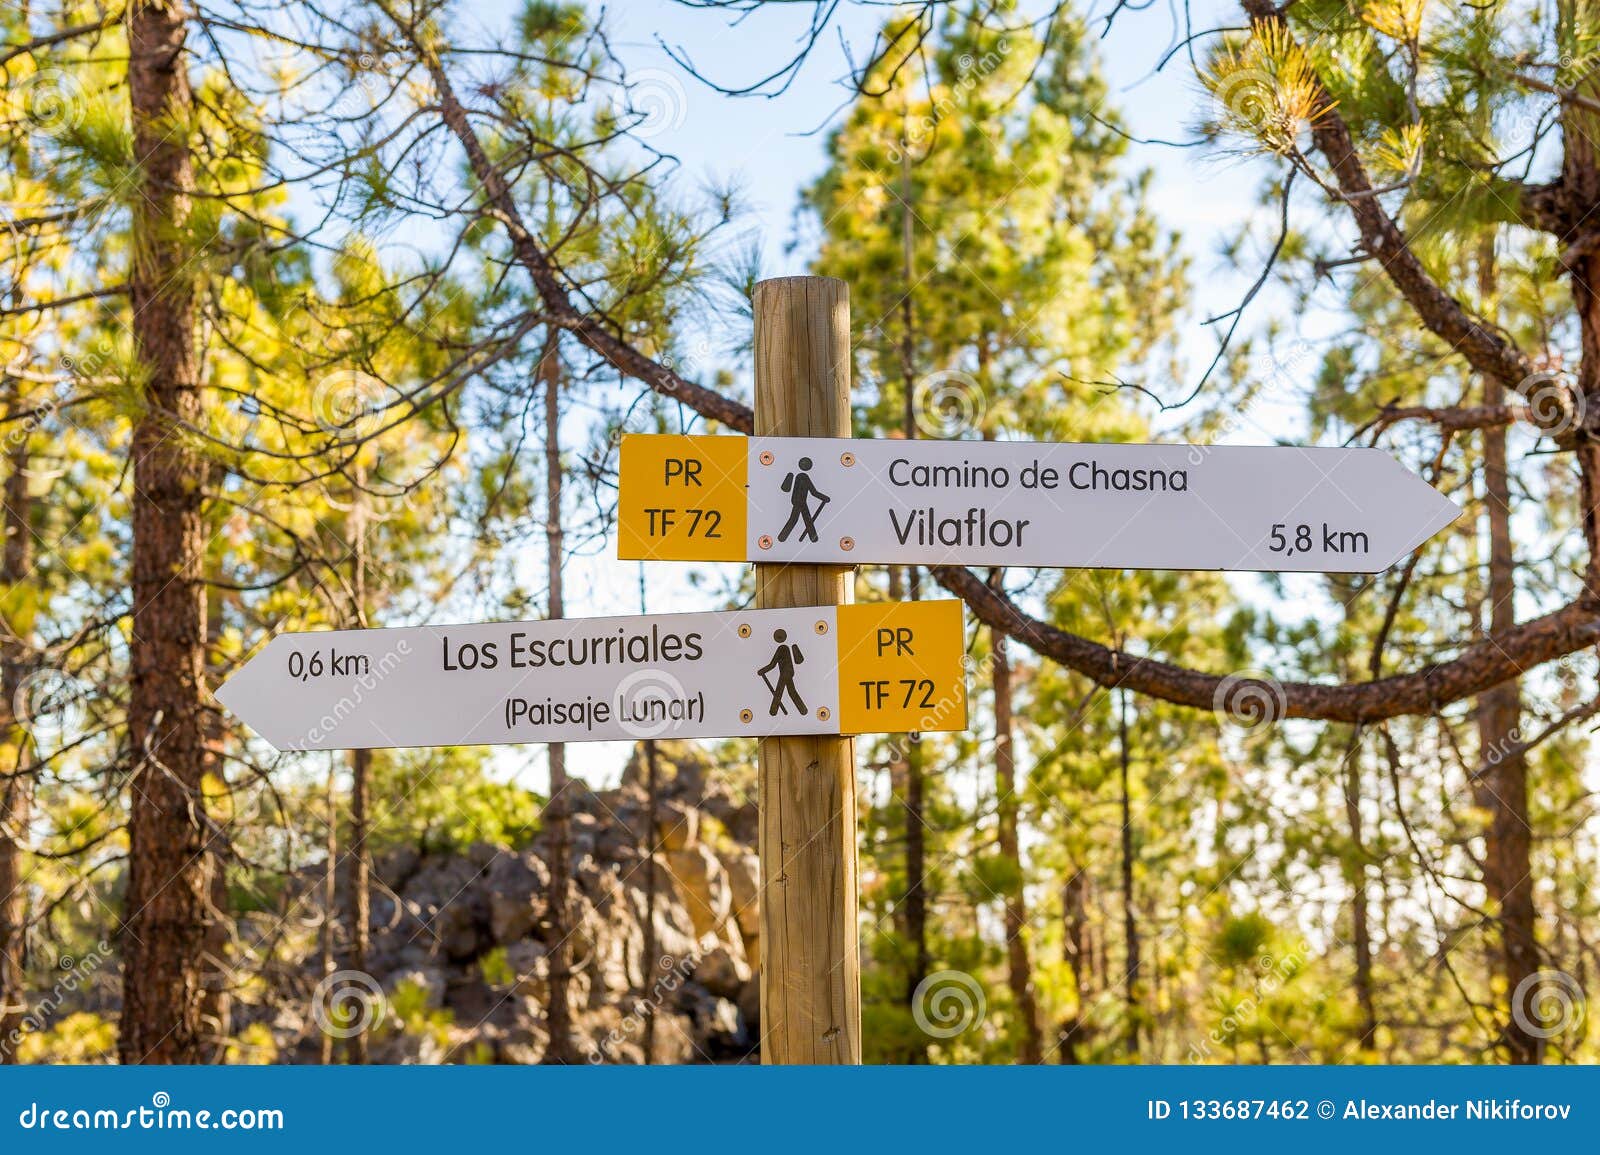 paisaje lunar and vilaflor hiking route sign